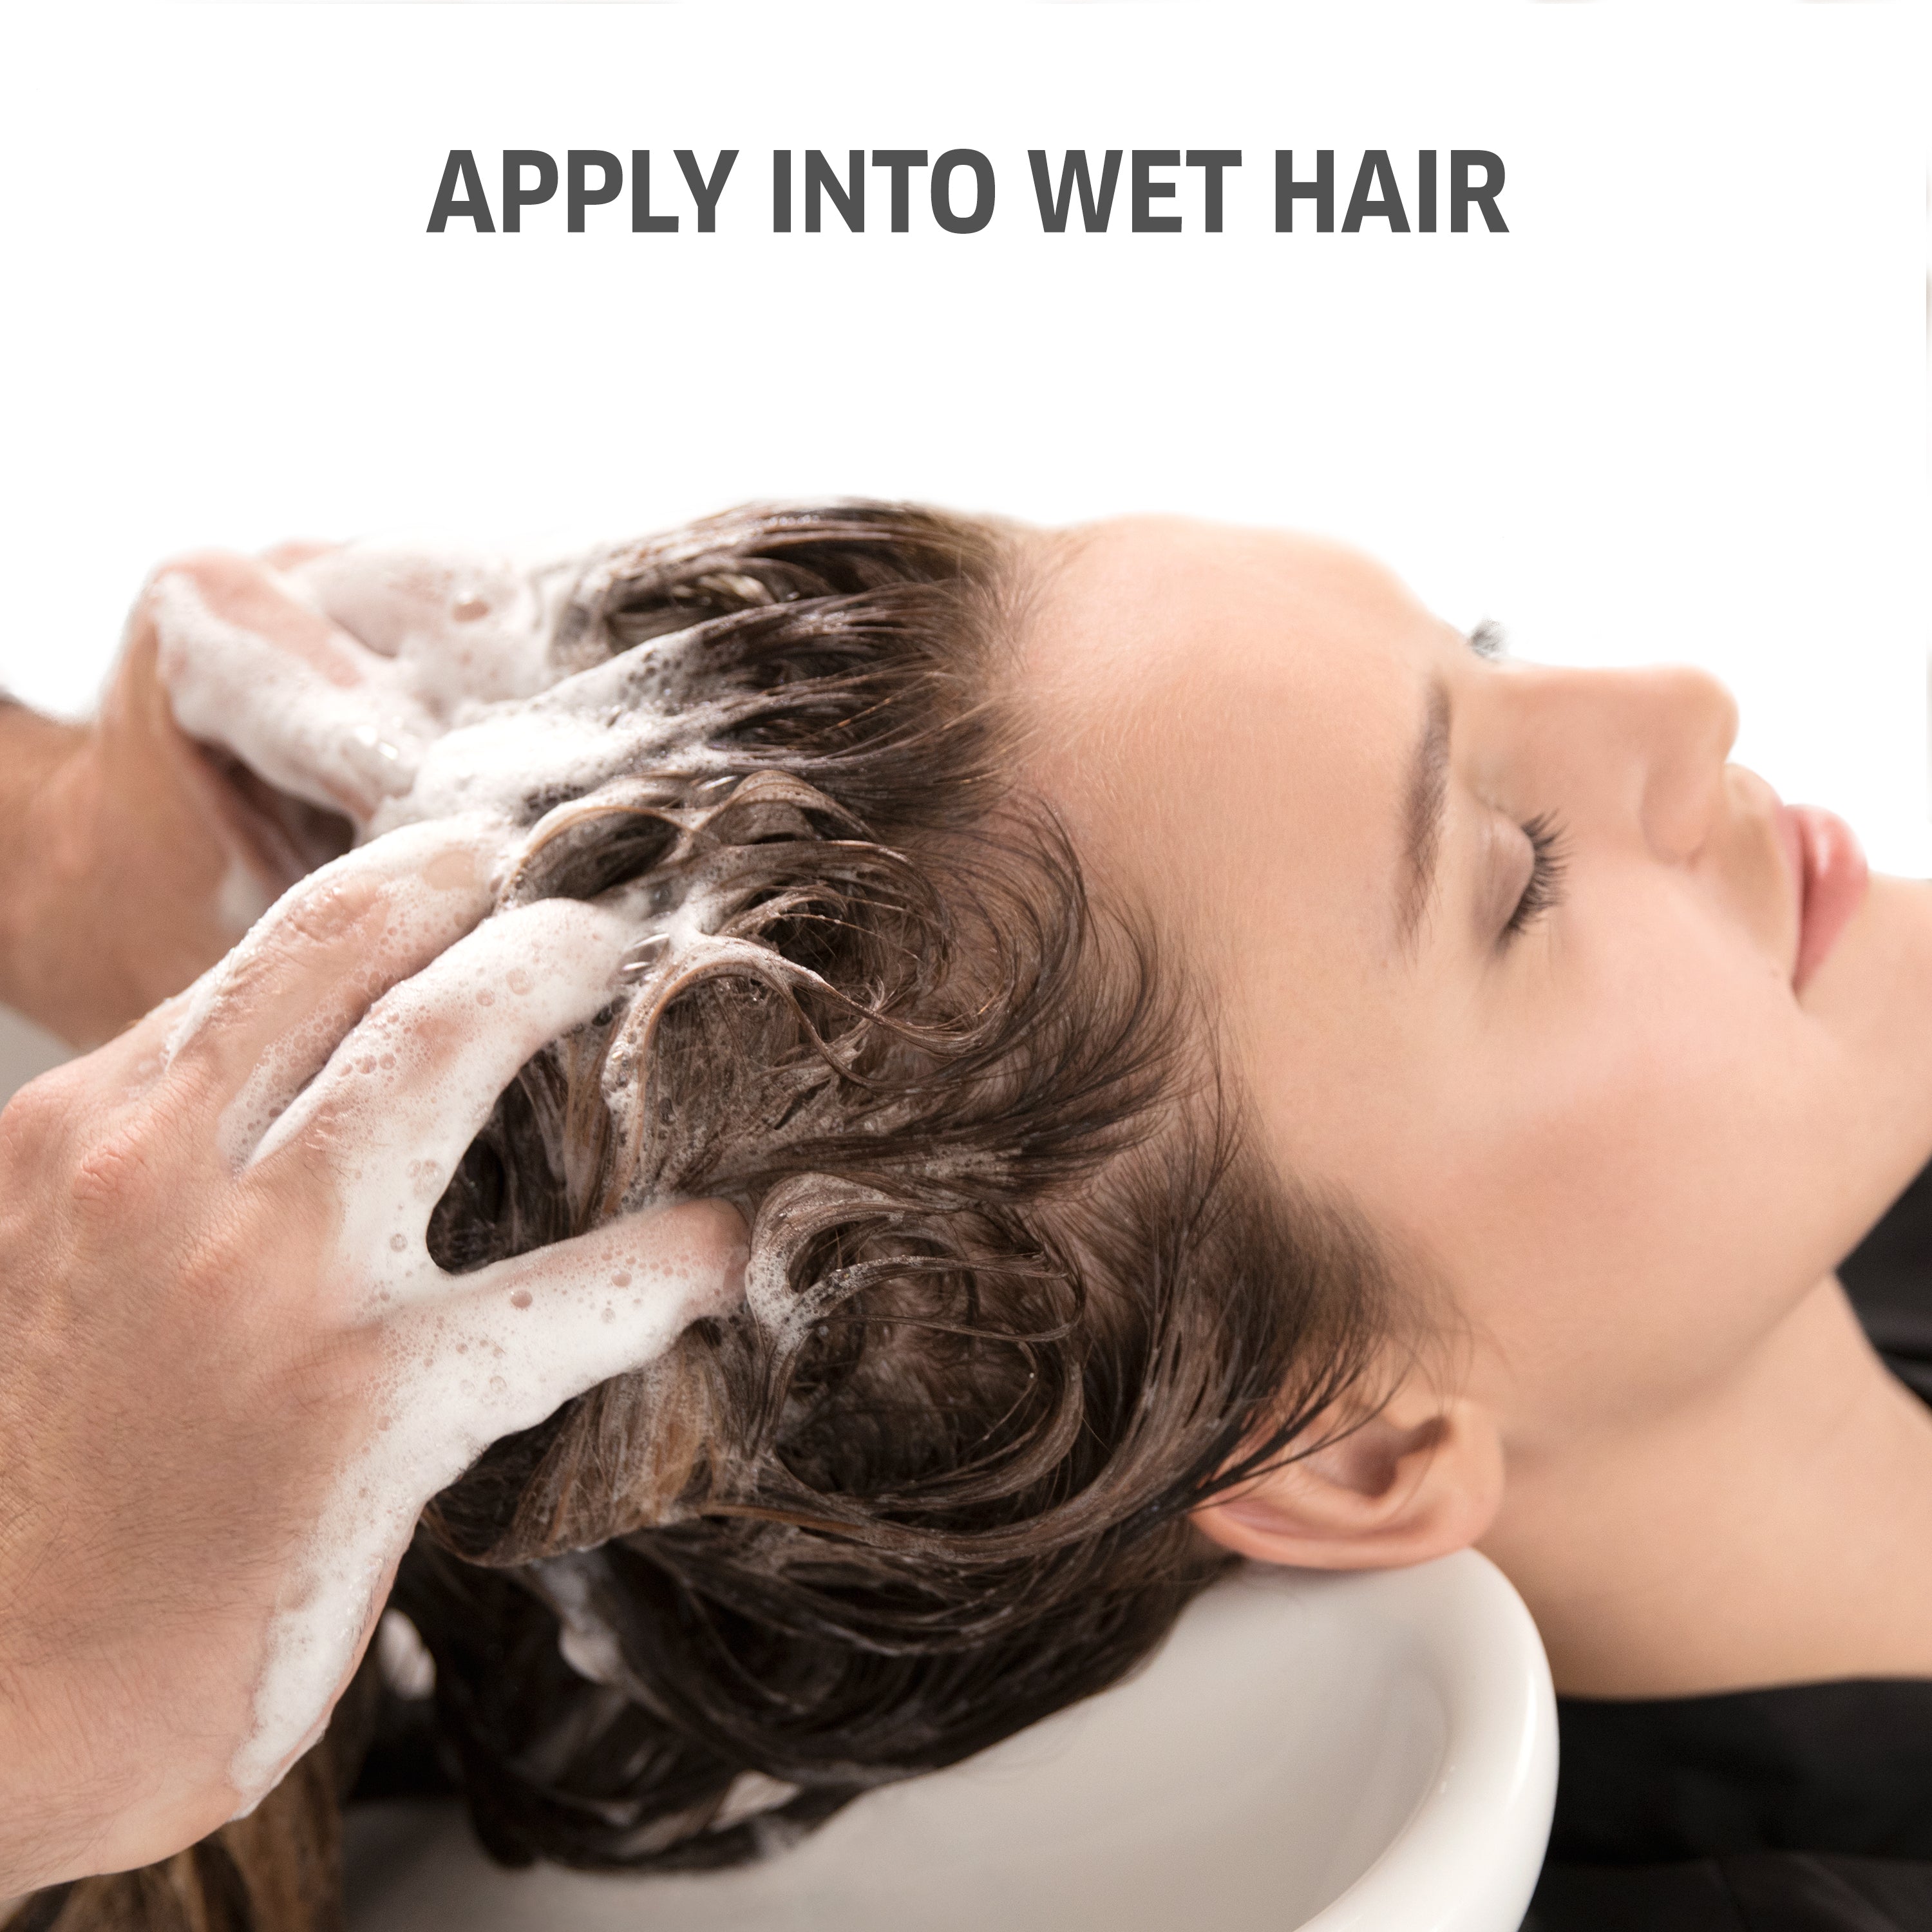 Wella Professional Invigo Shampoo 250 ML Nutri Enrich